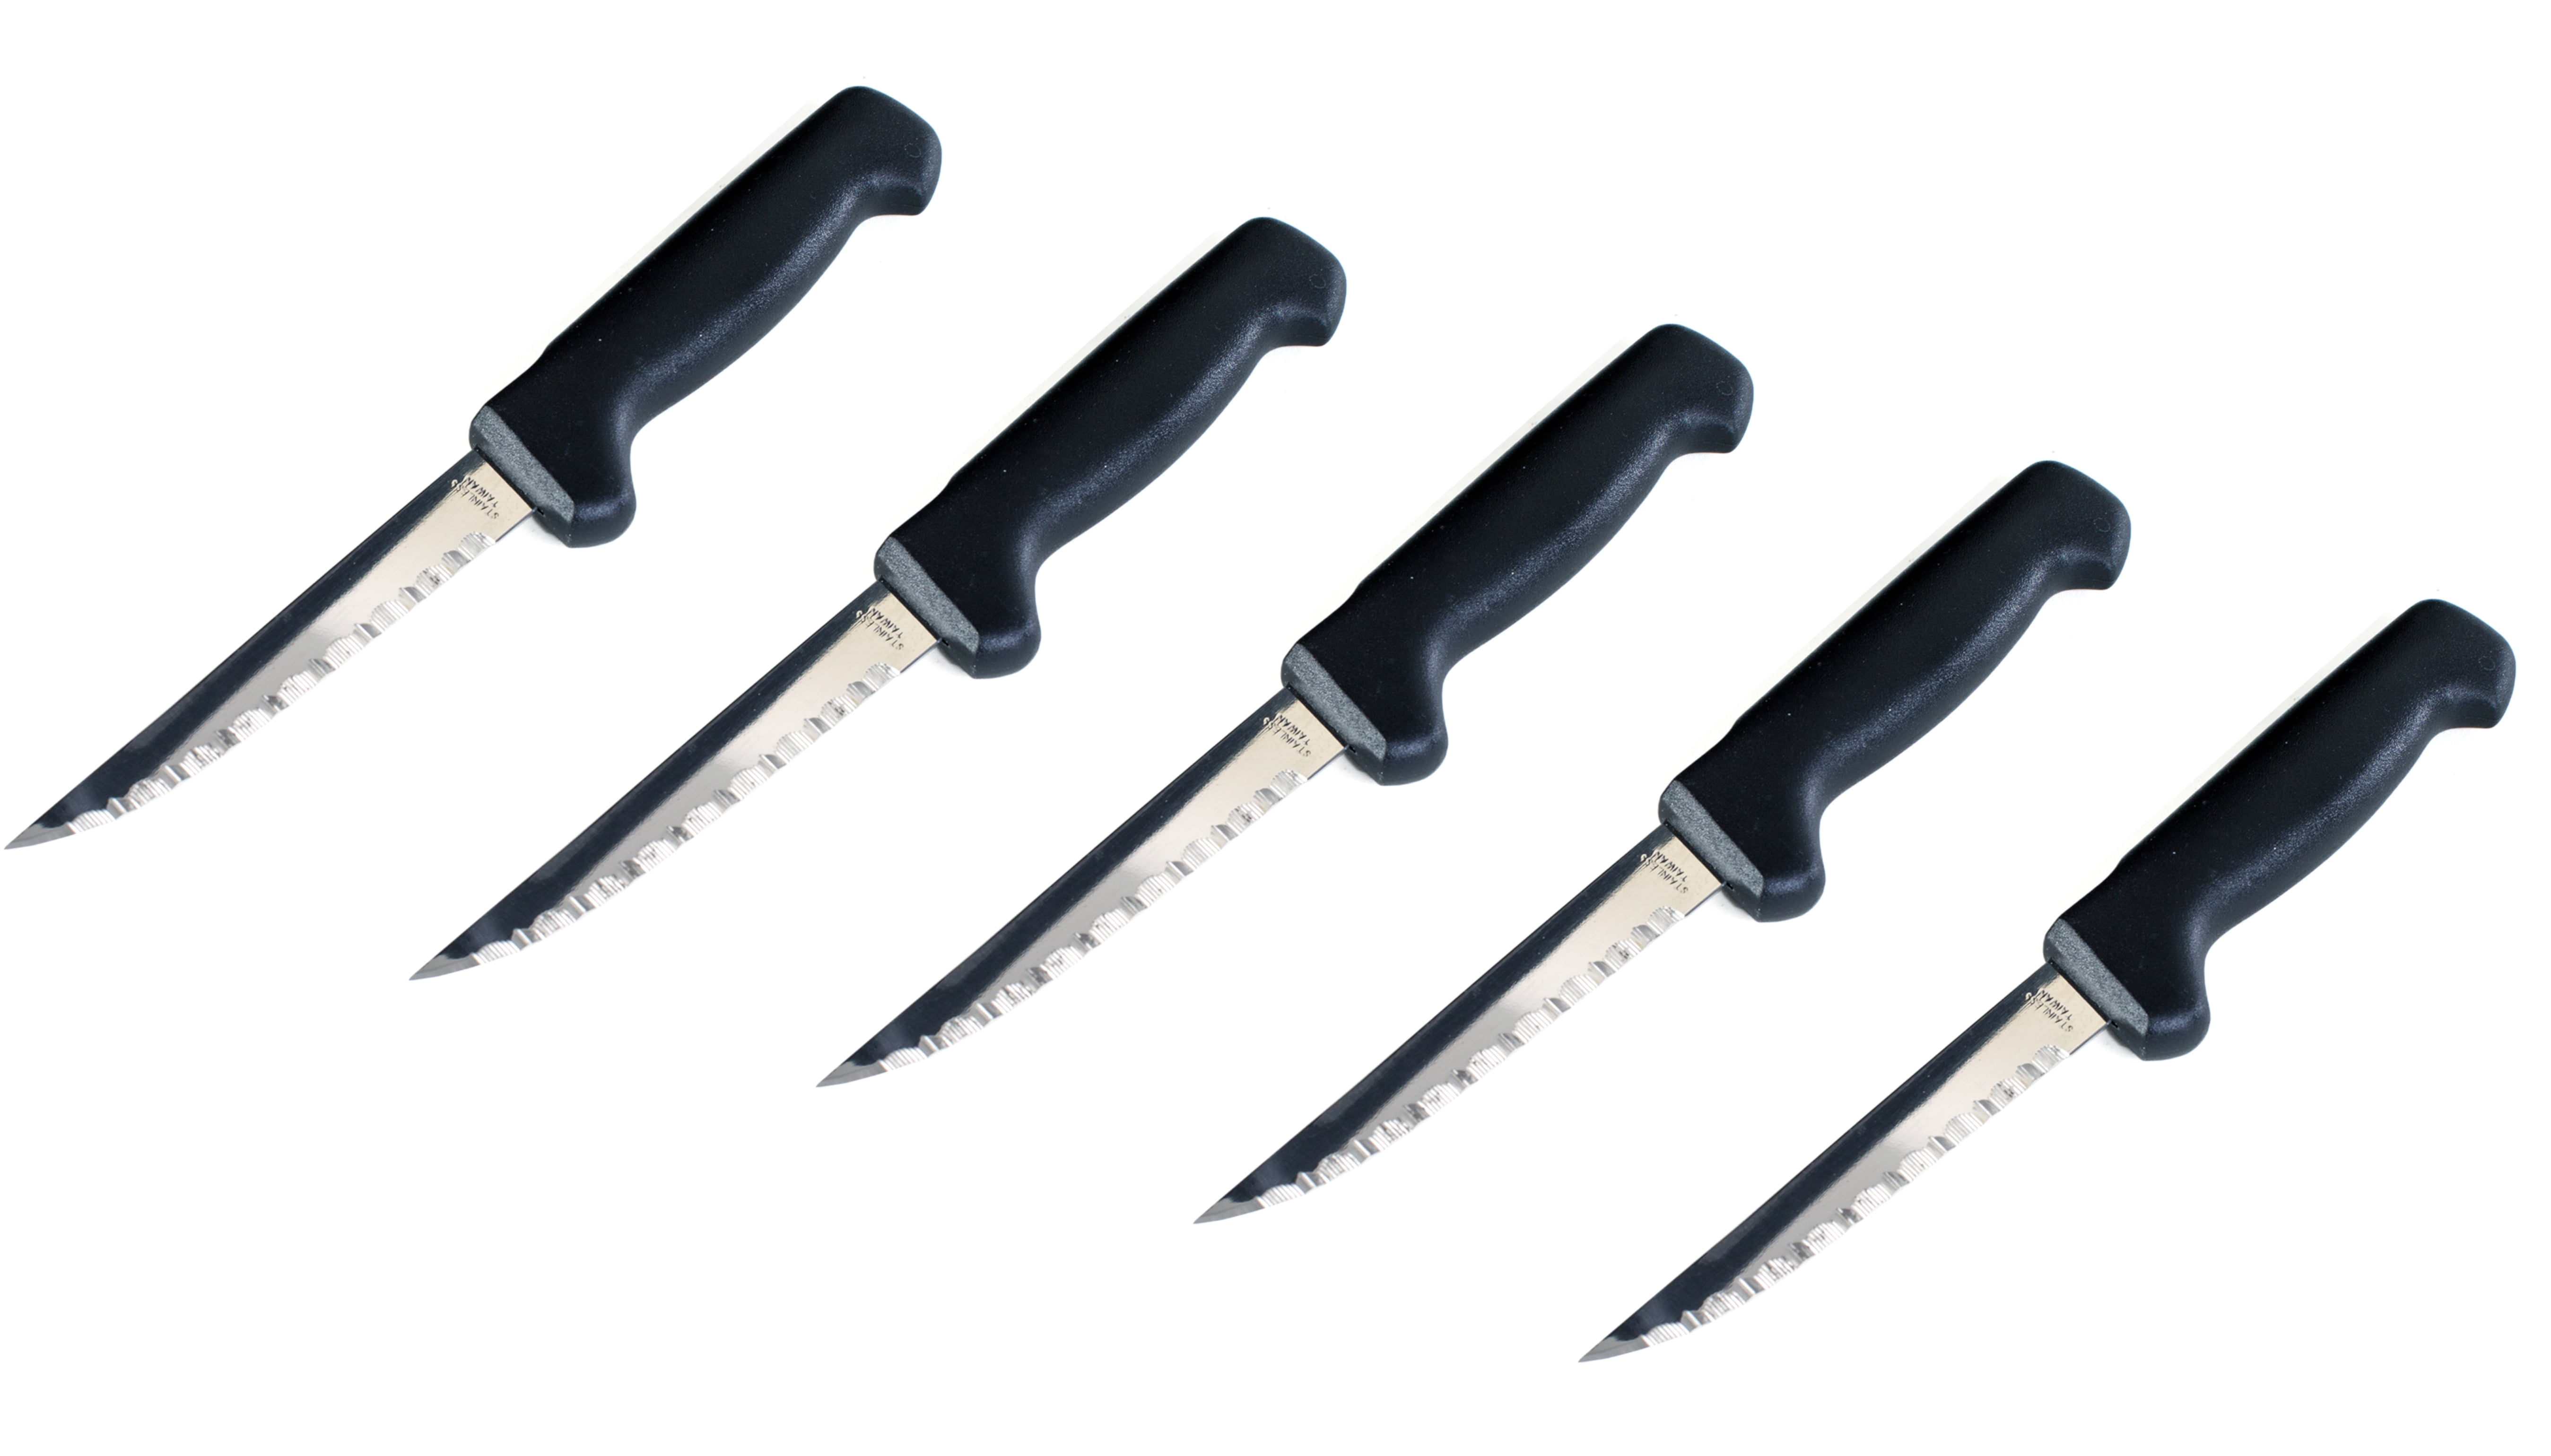 HAUSHOF Steak Knives Set of 6, Serrated Steak Knives, Premium Stainless Steel Steak Knife Set with Gift Box, Black Handle